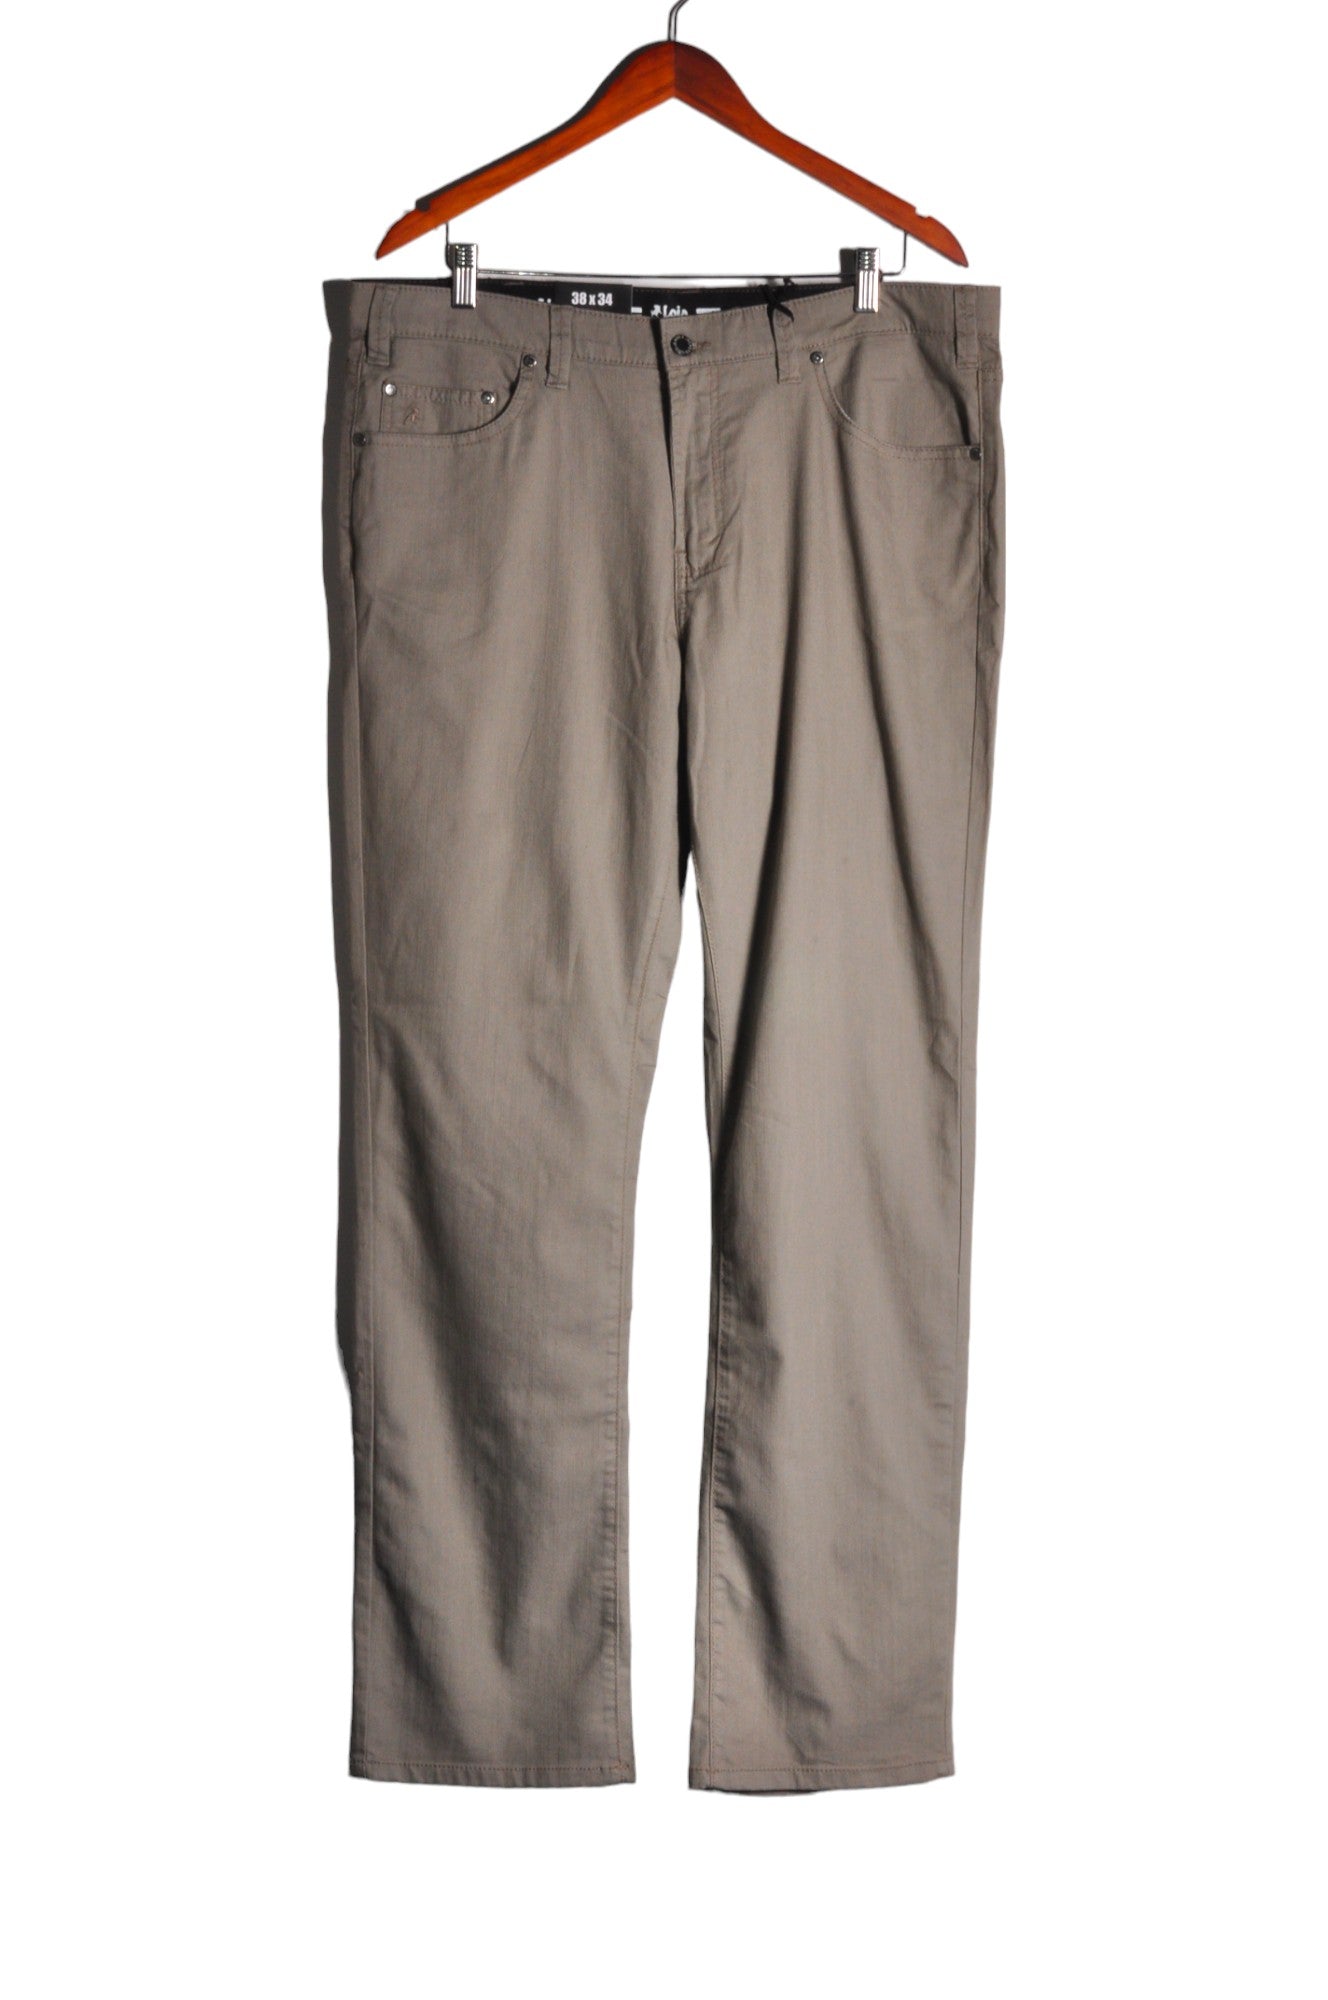 LOIS Men Work Pants Regular fit in Gray - Size 30x34 | 35 $ KOOP